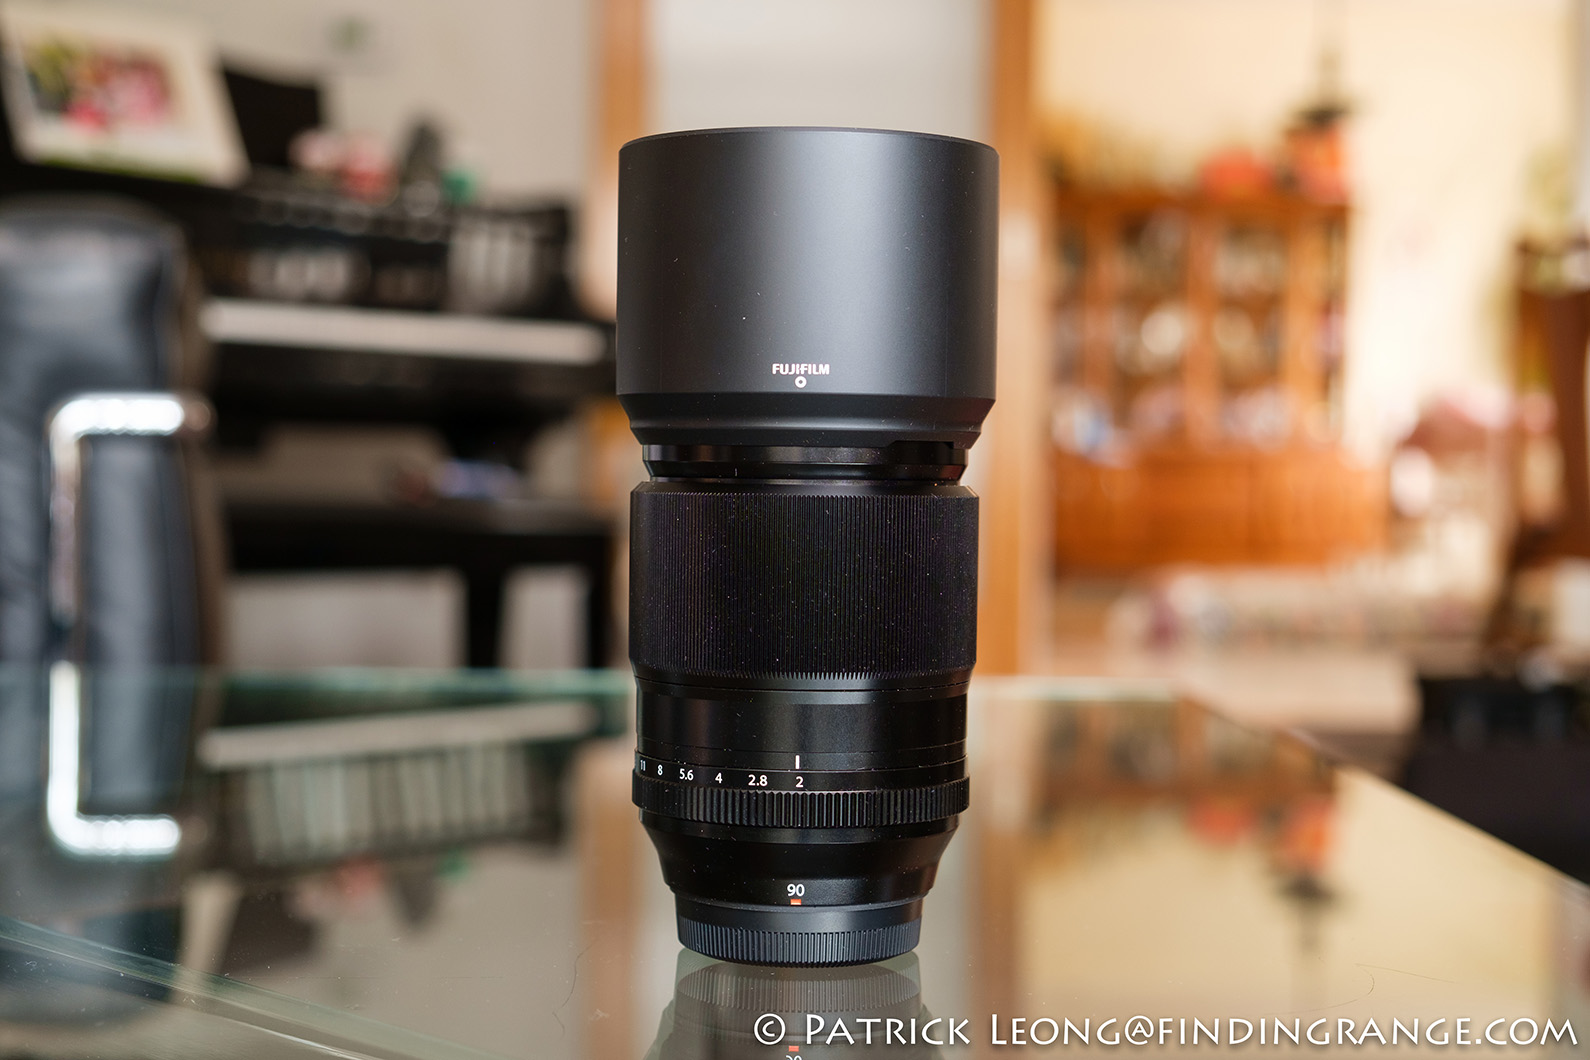 Fuji XF 90mm F2 LM WR Lens Review